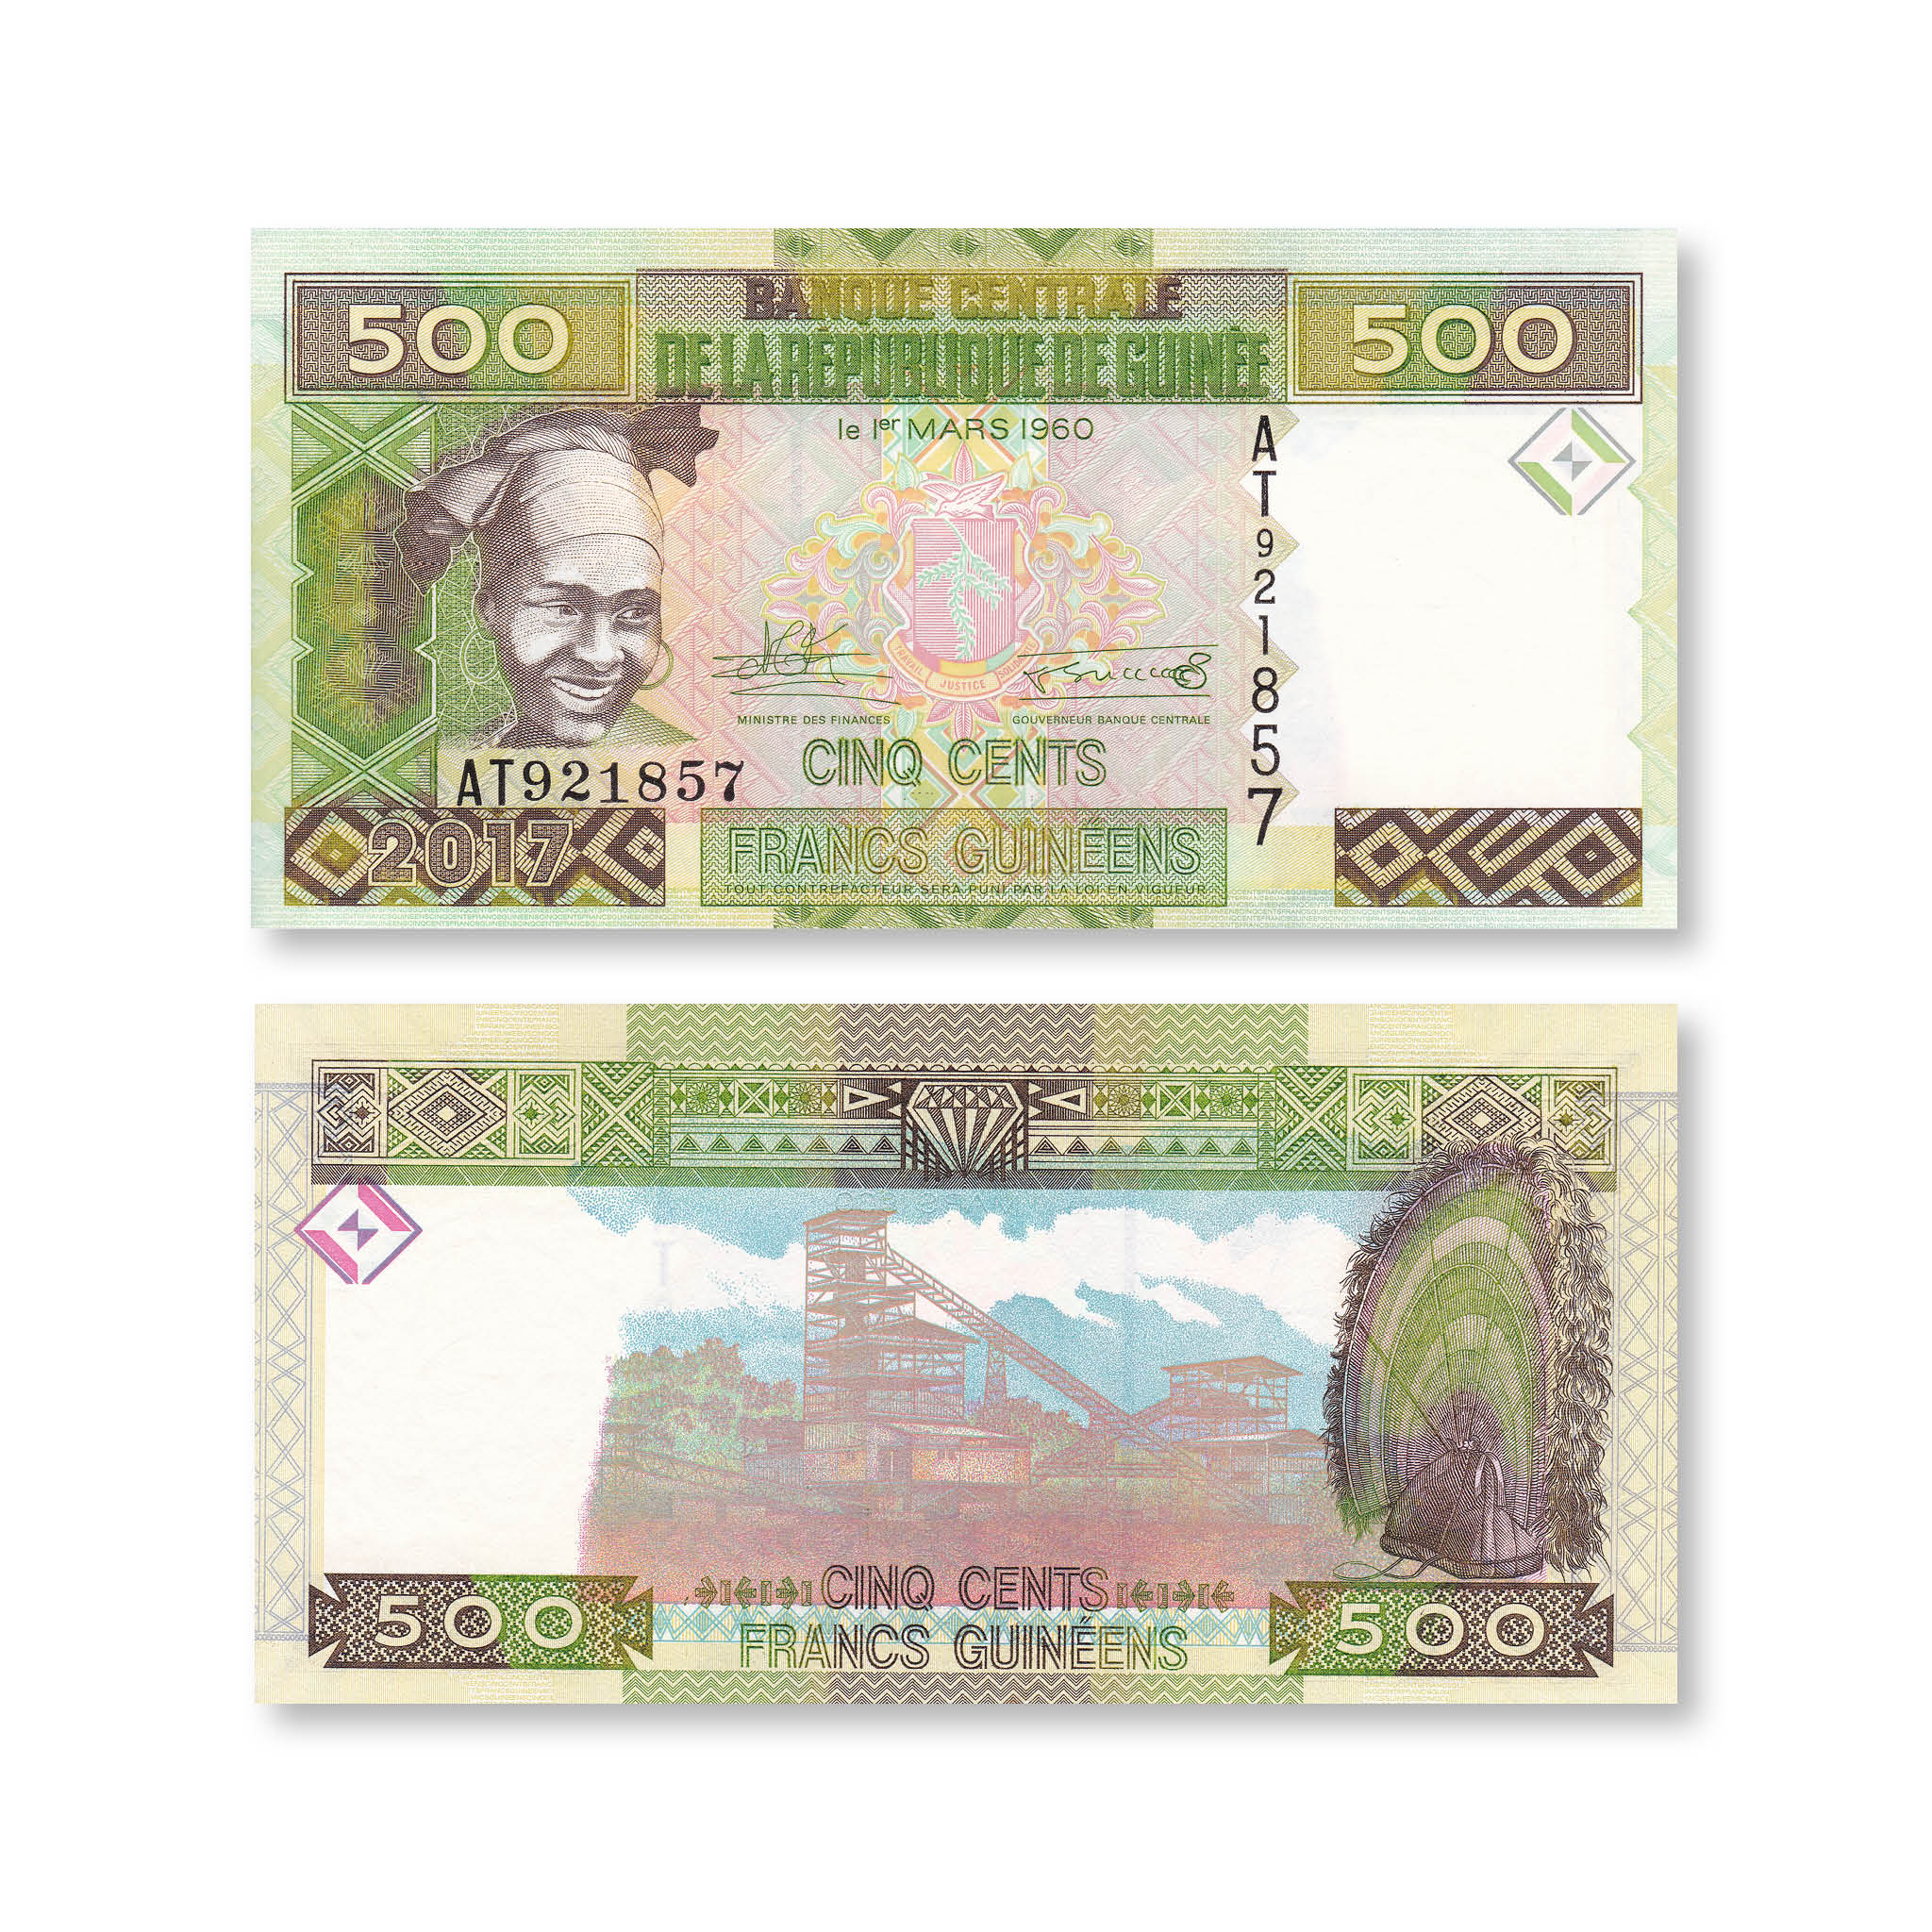 Guinea 500 Francs, 2017, B338b, P47b, UNC - Robert's World Money - World Banknotes